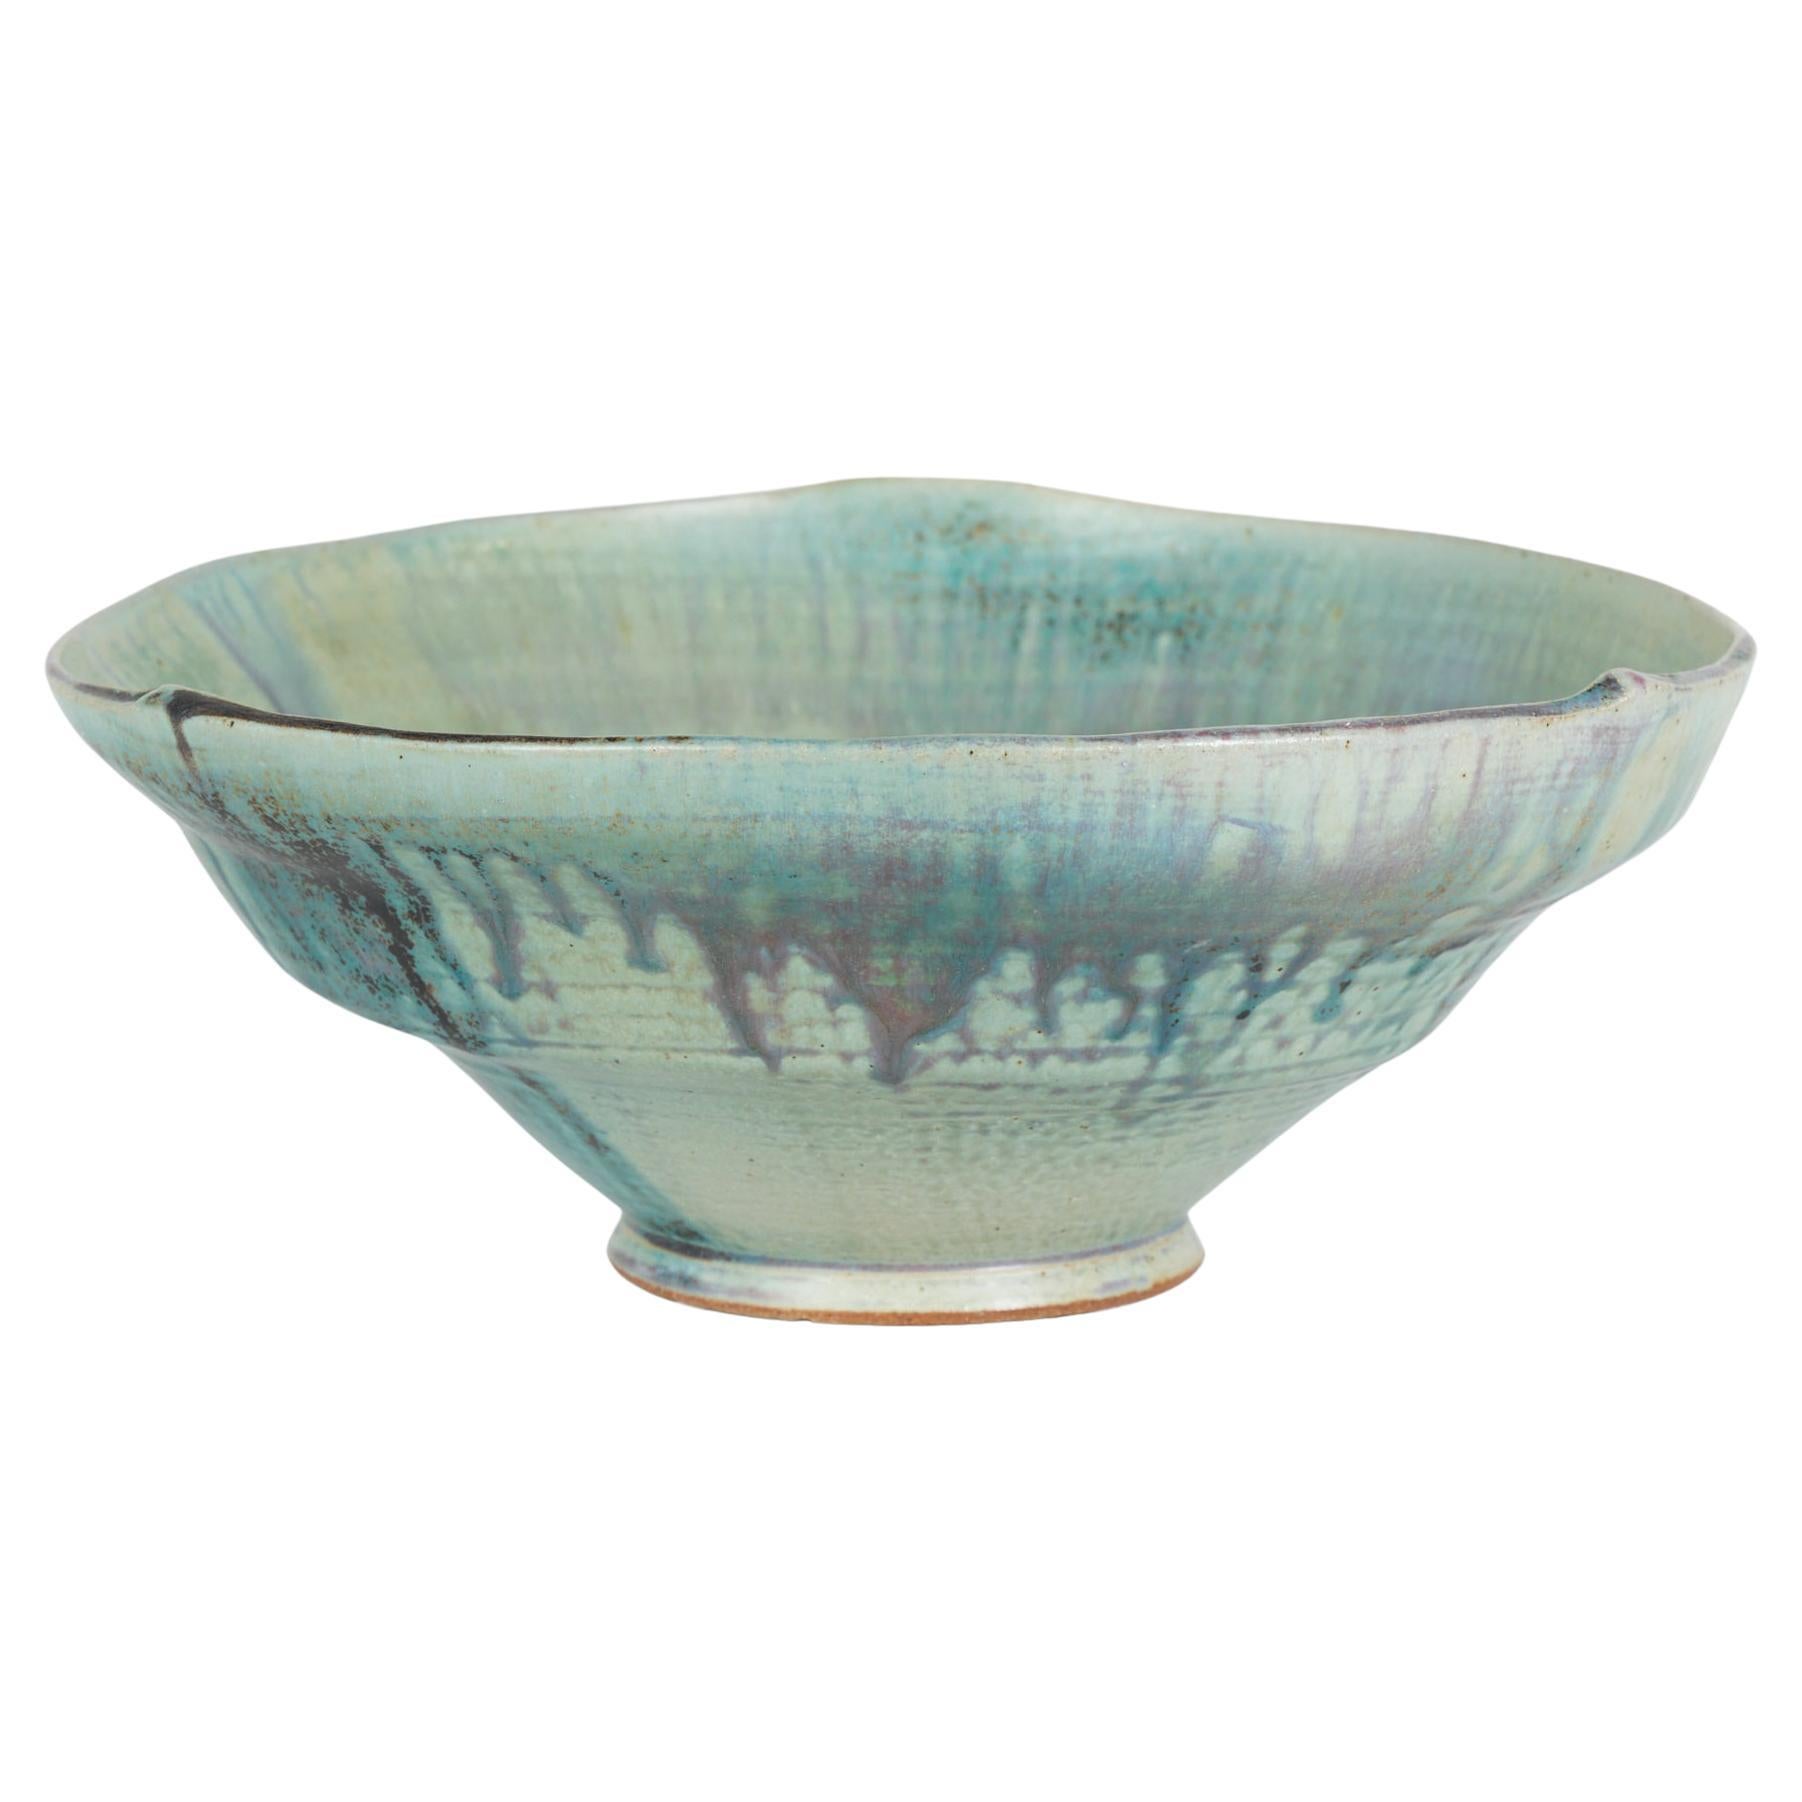 Decorative Glazed Stoneware Bowl by McMillen